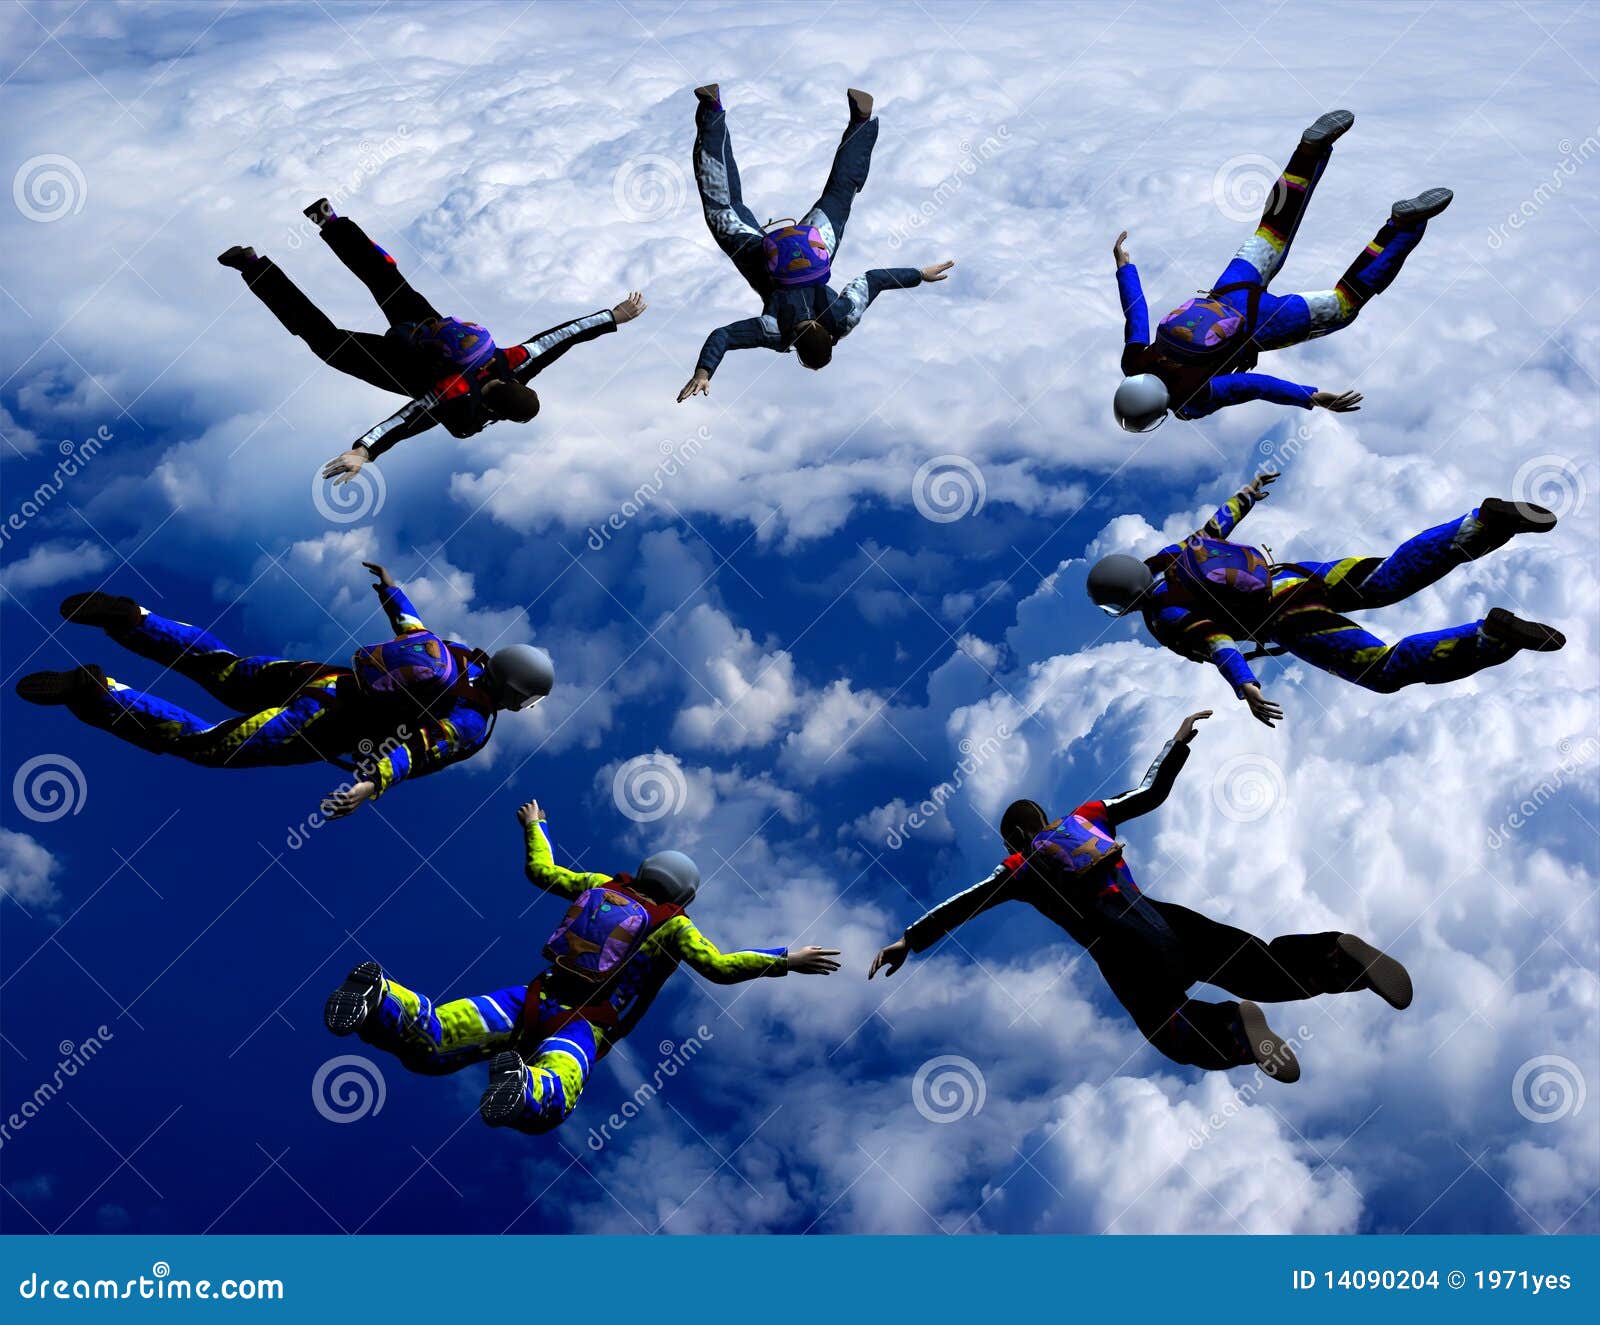 Sport is in sky stock illustration. Illustration of speed - 14090204